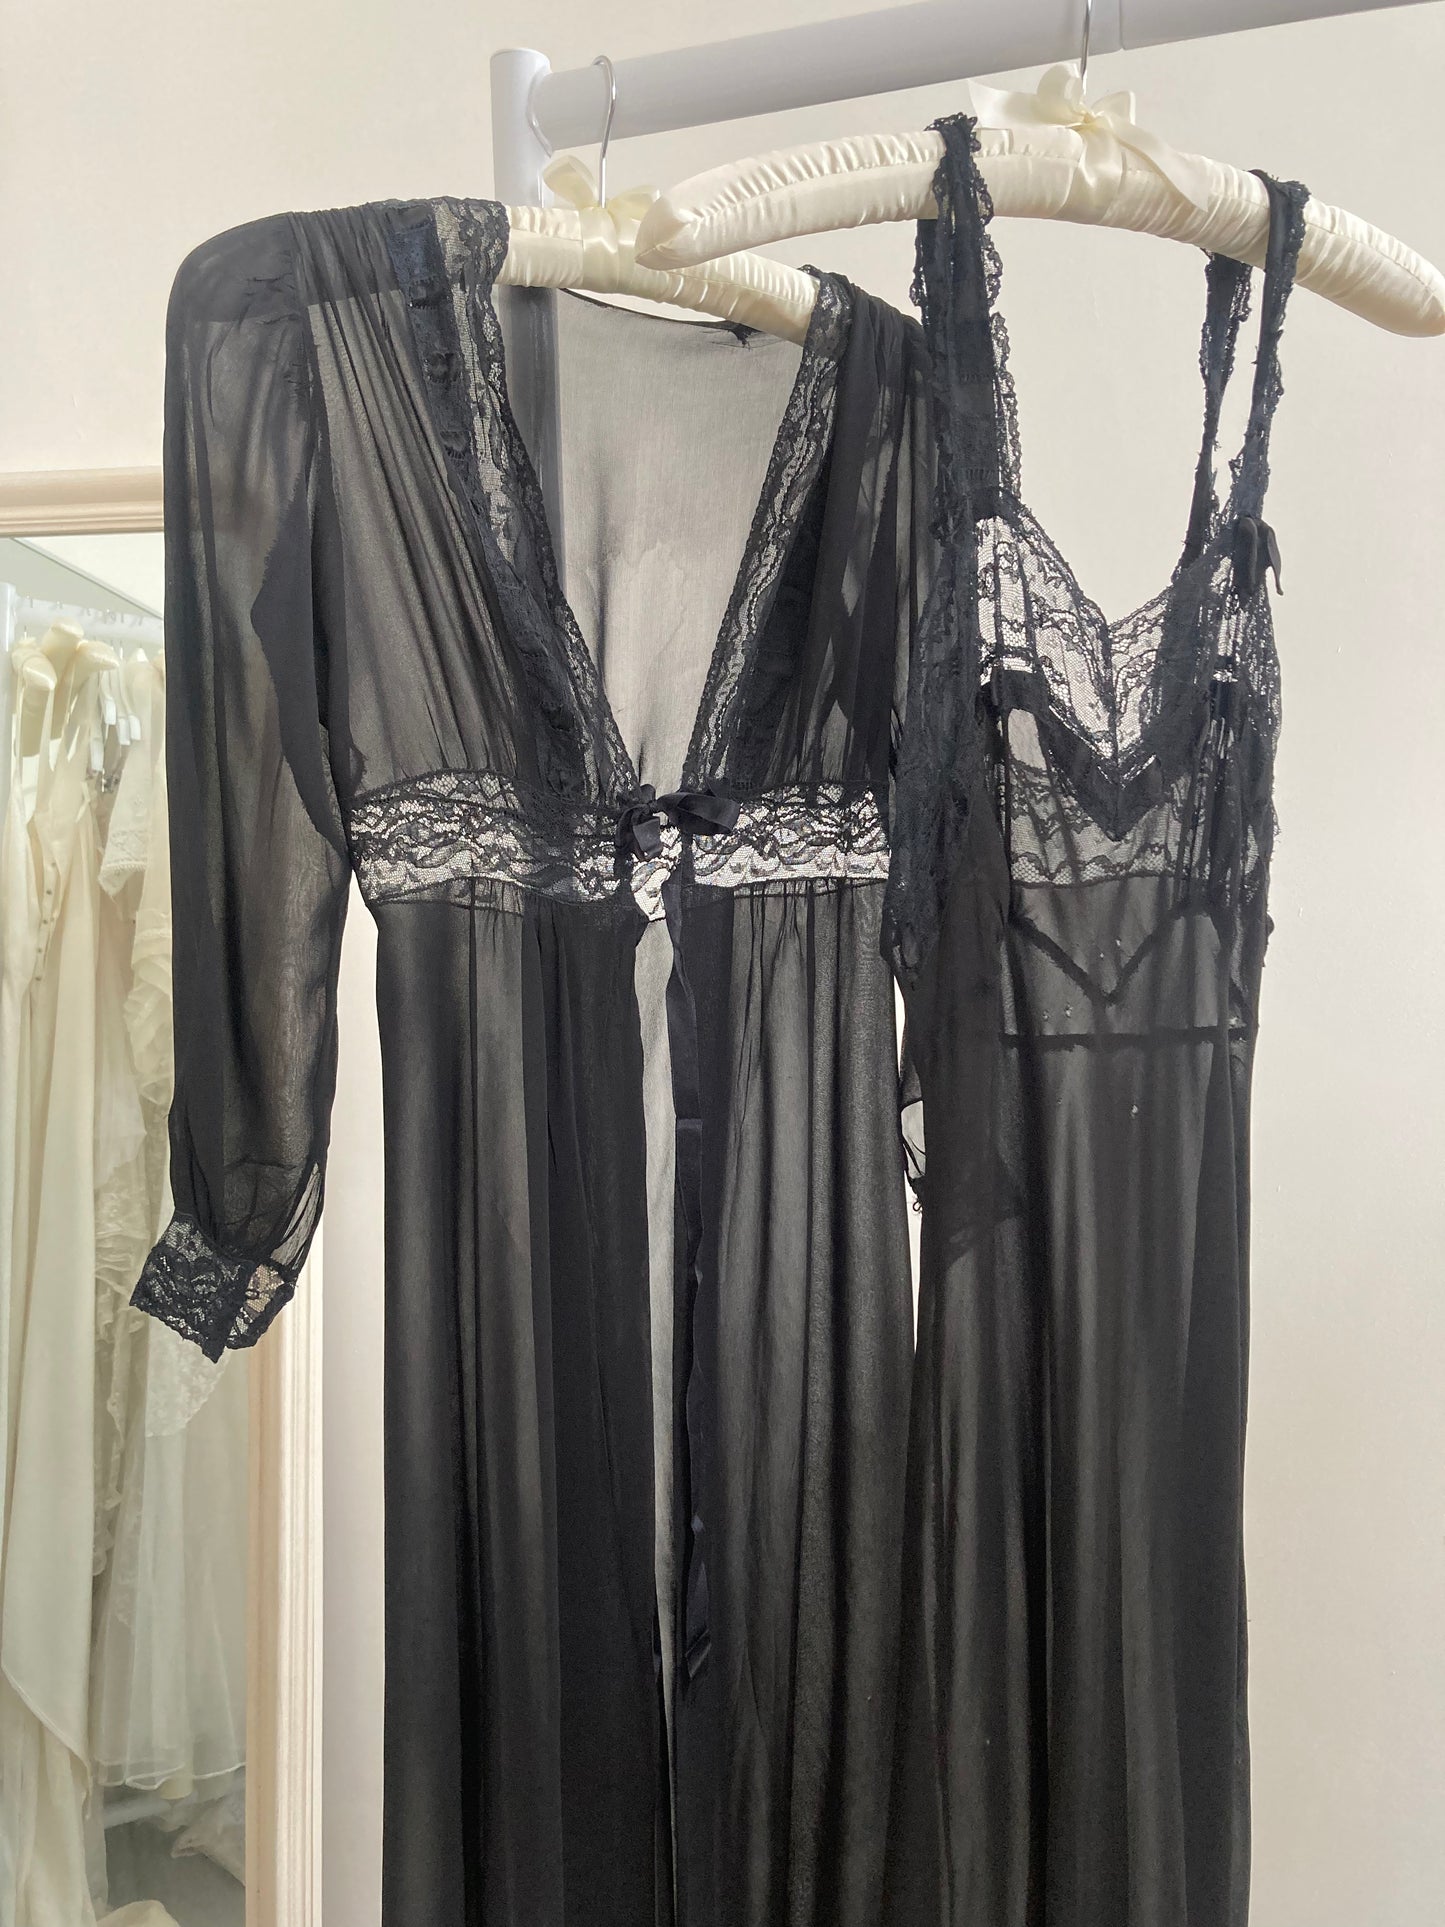 1930s Black Chiffon and Lace Slip and Robe Set